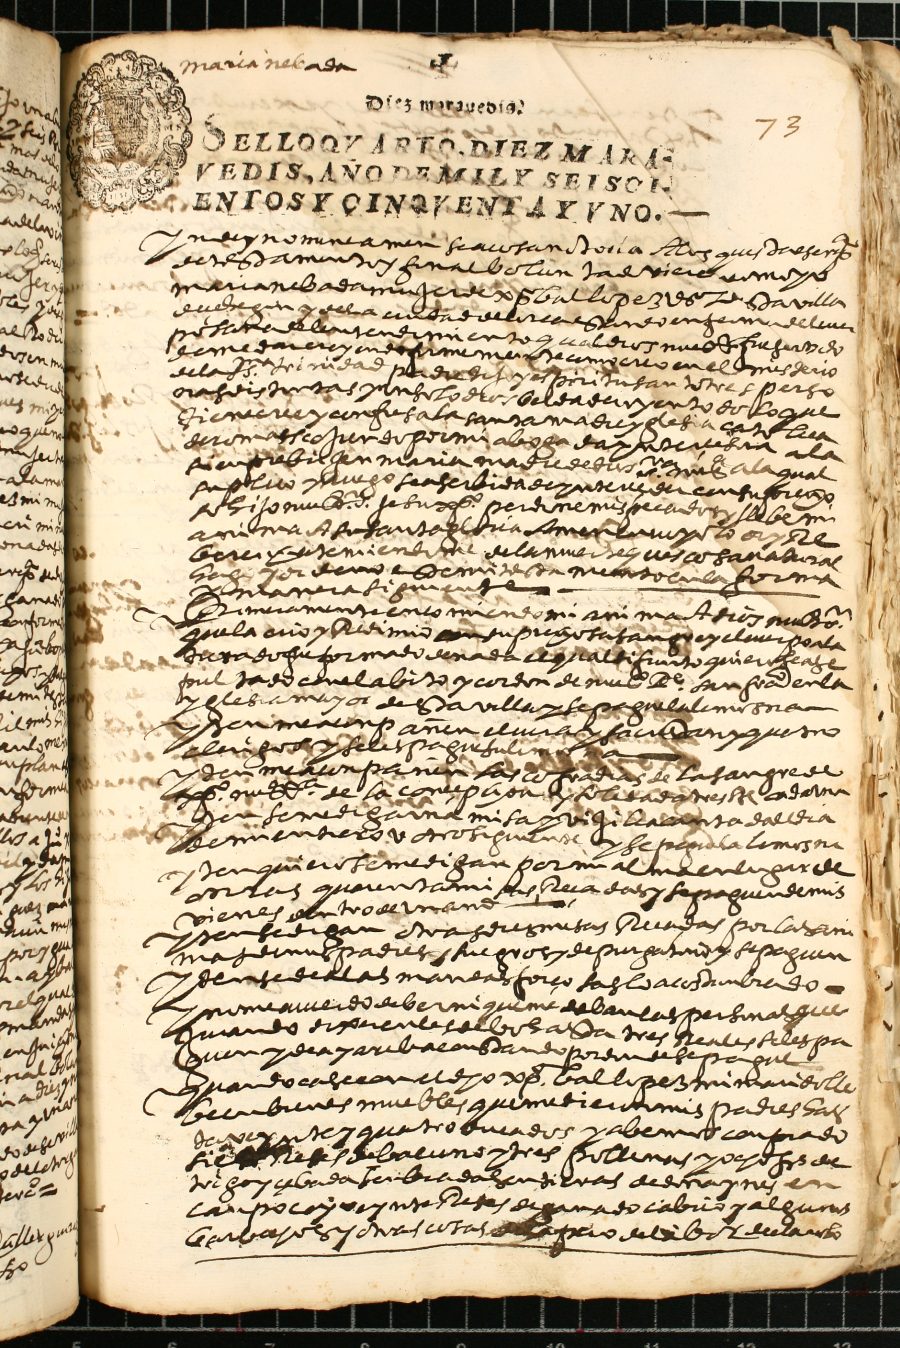 Testamento de María Nevada, mujer de Cristóbal López, vecina de Cehegín.